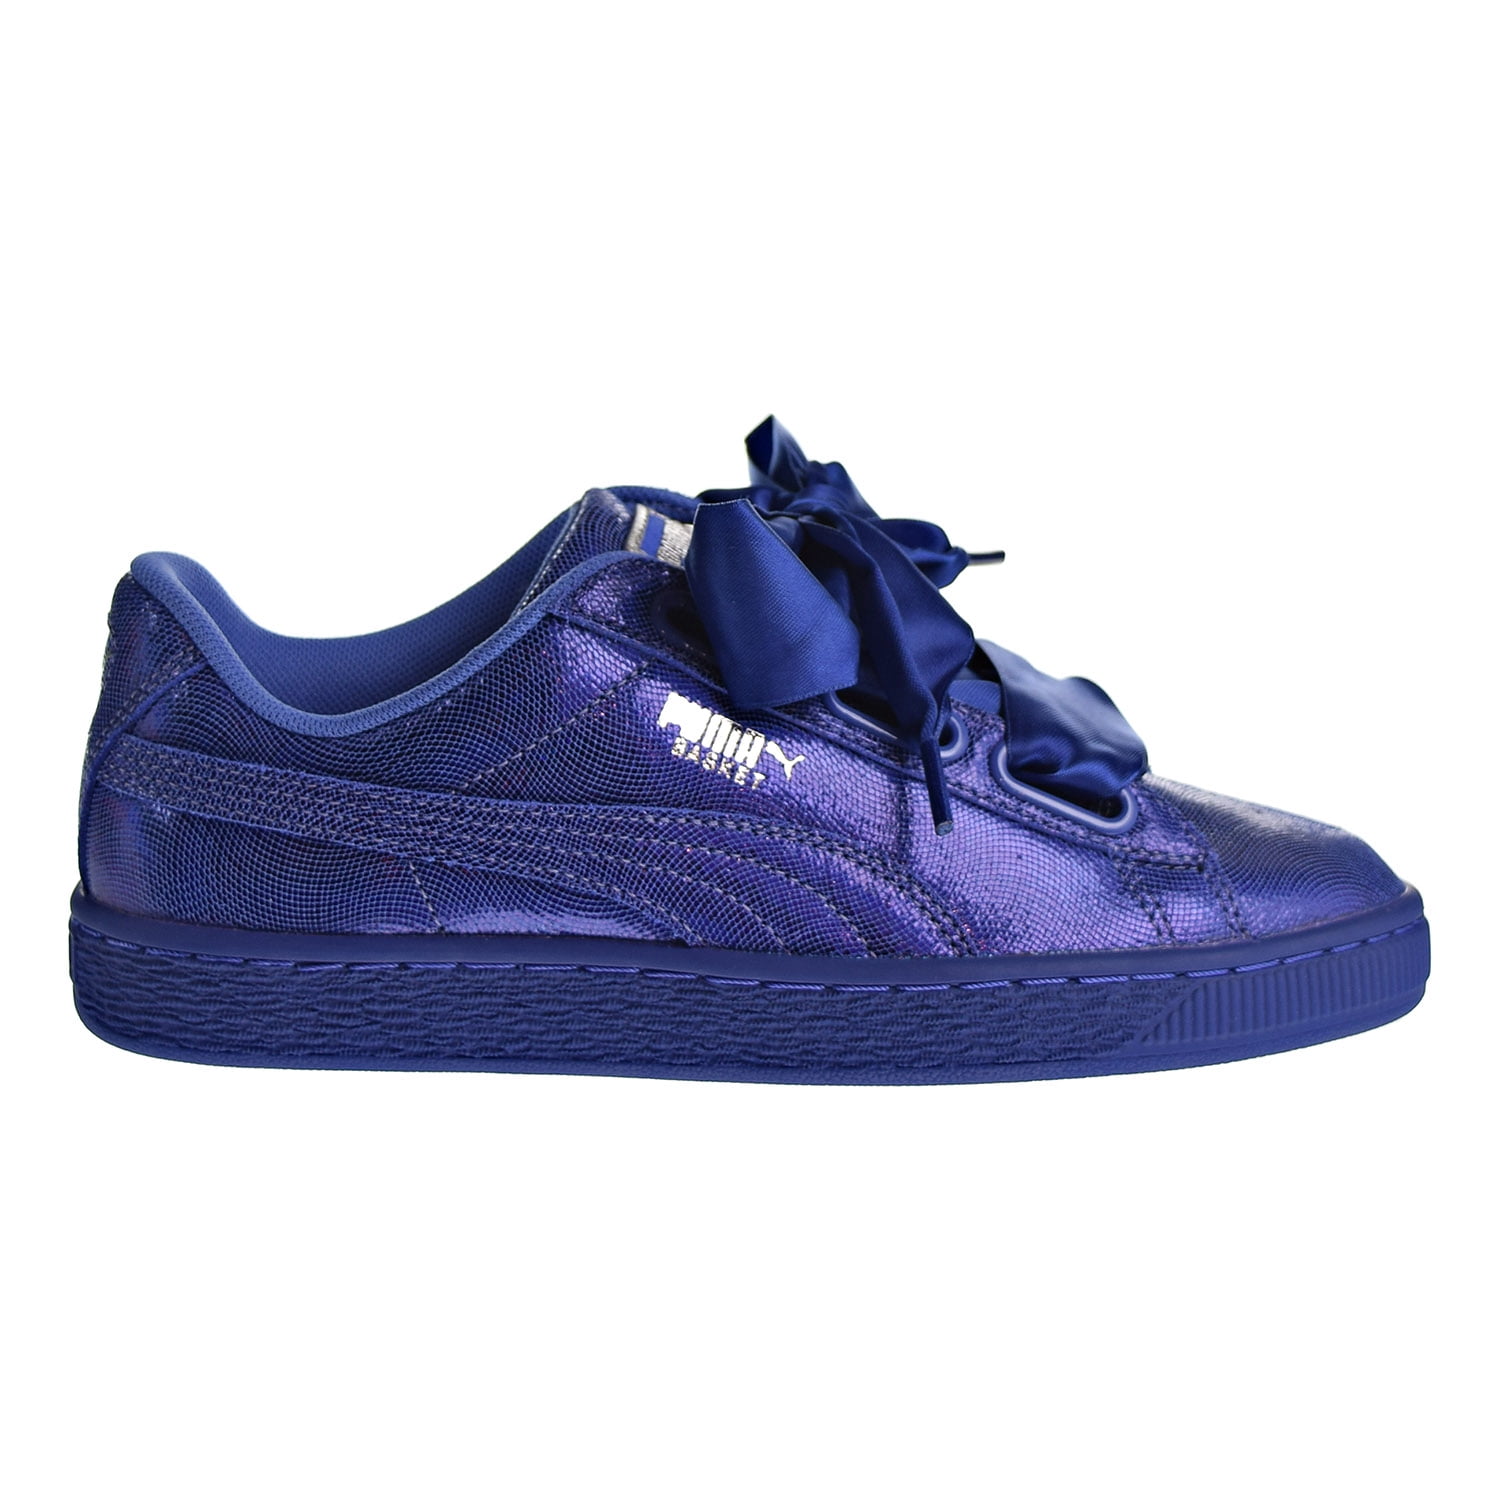 Millas impulso insulto Puma Basket Heart NS Women's Shoes Baja Blue 364108-03 - Walmart.com